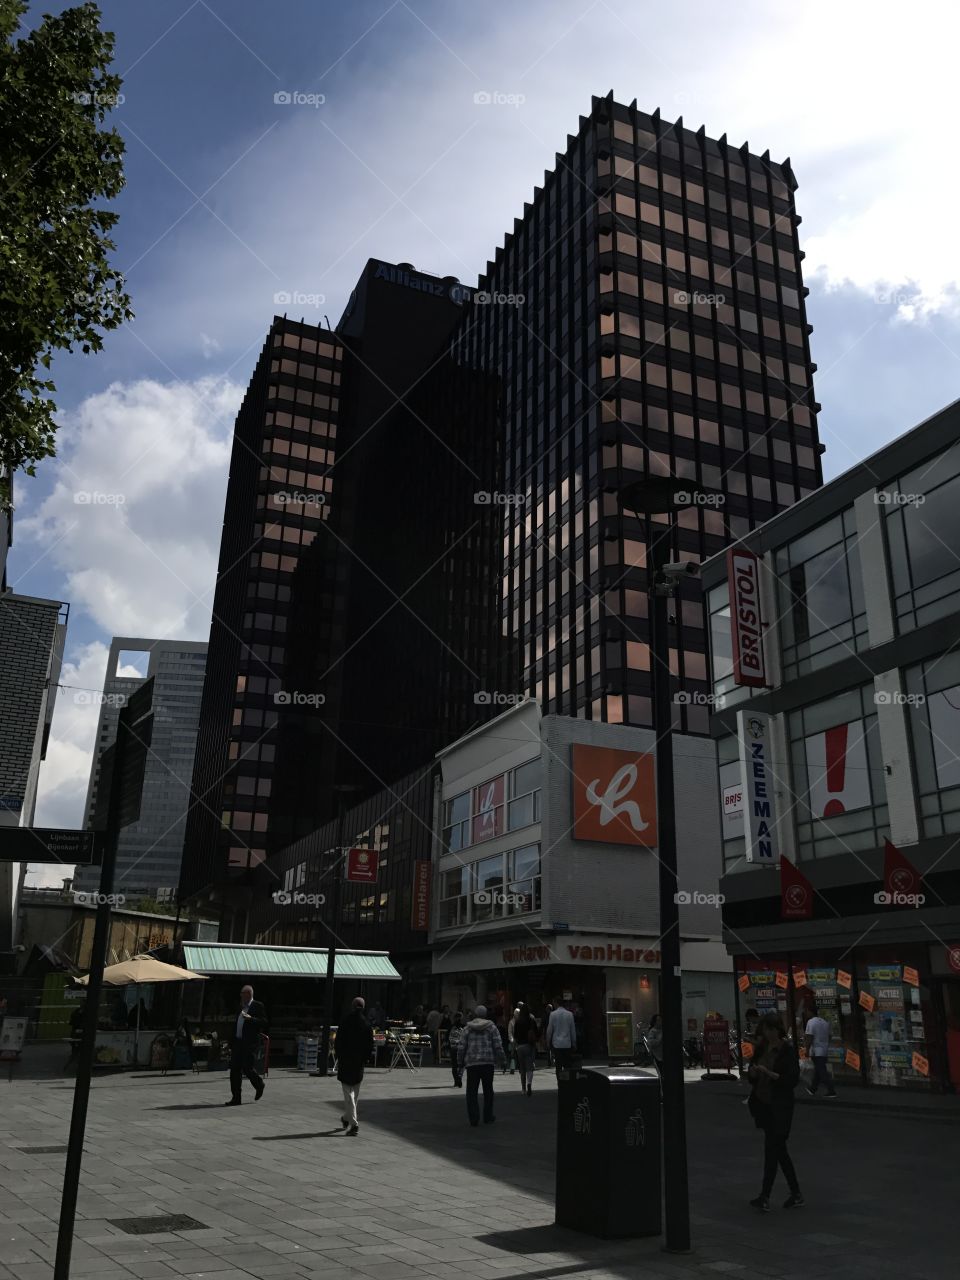 Shopping center in Rotterdam, Netherlands 